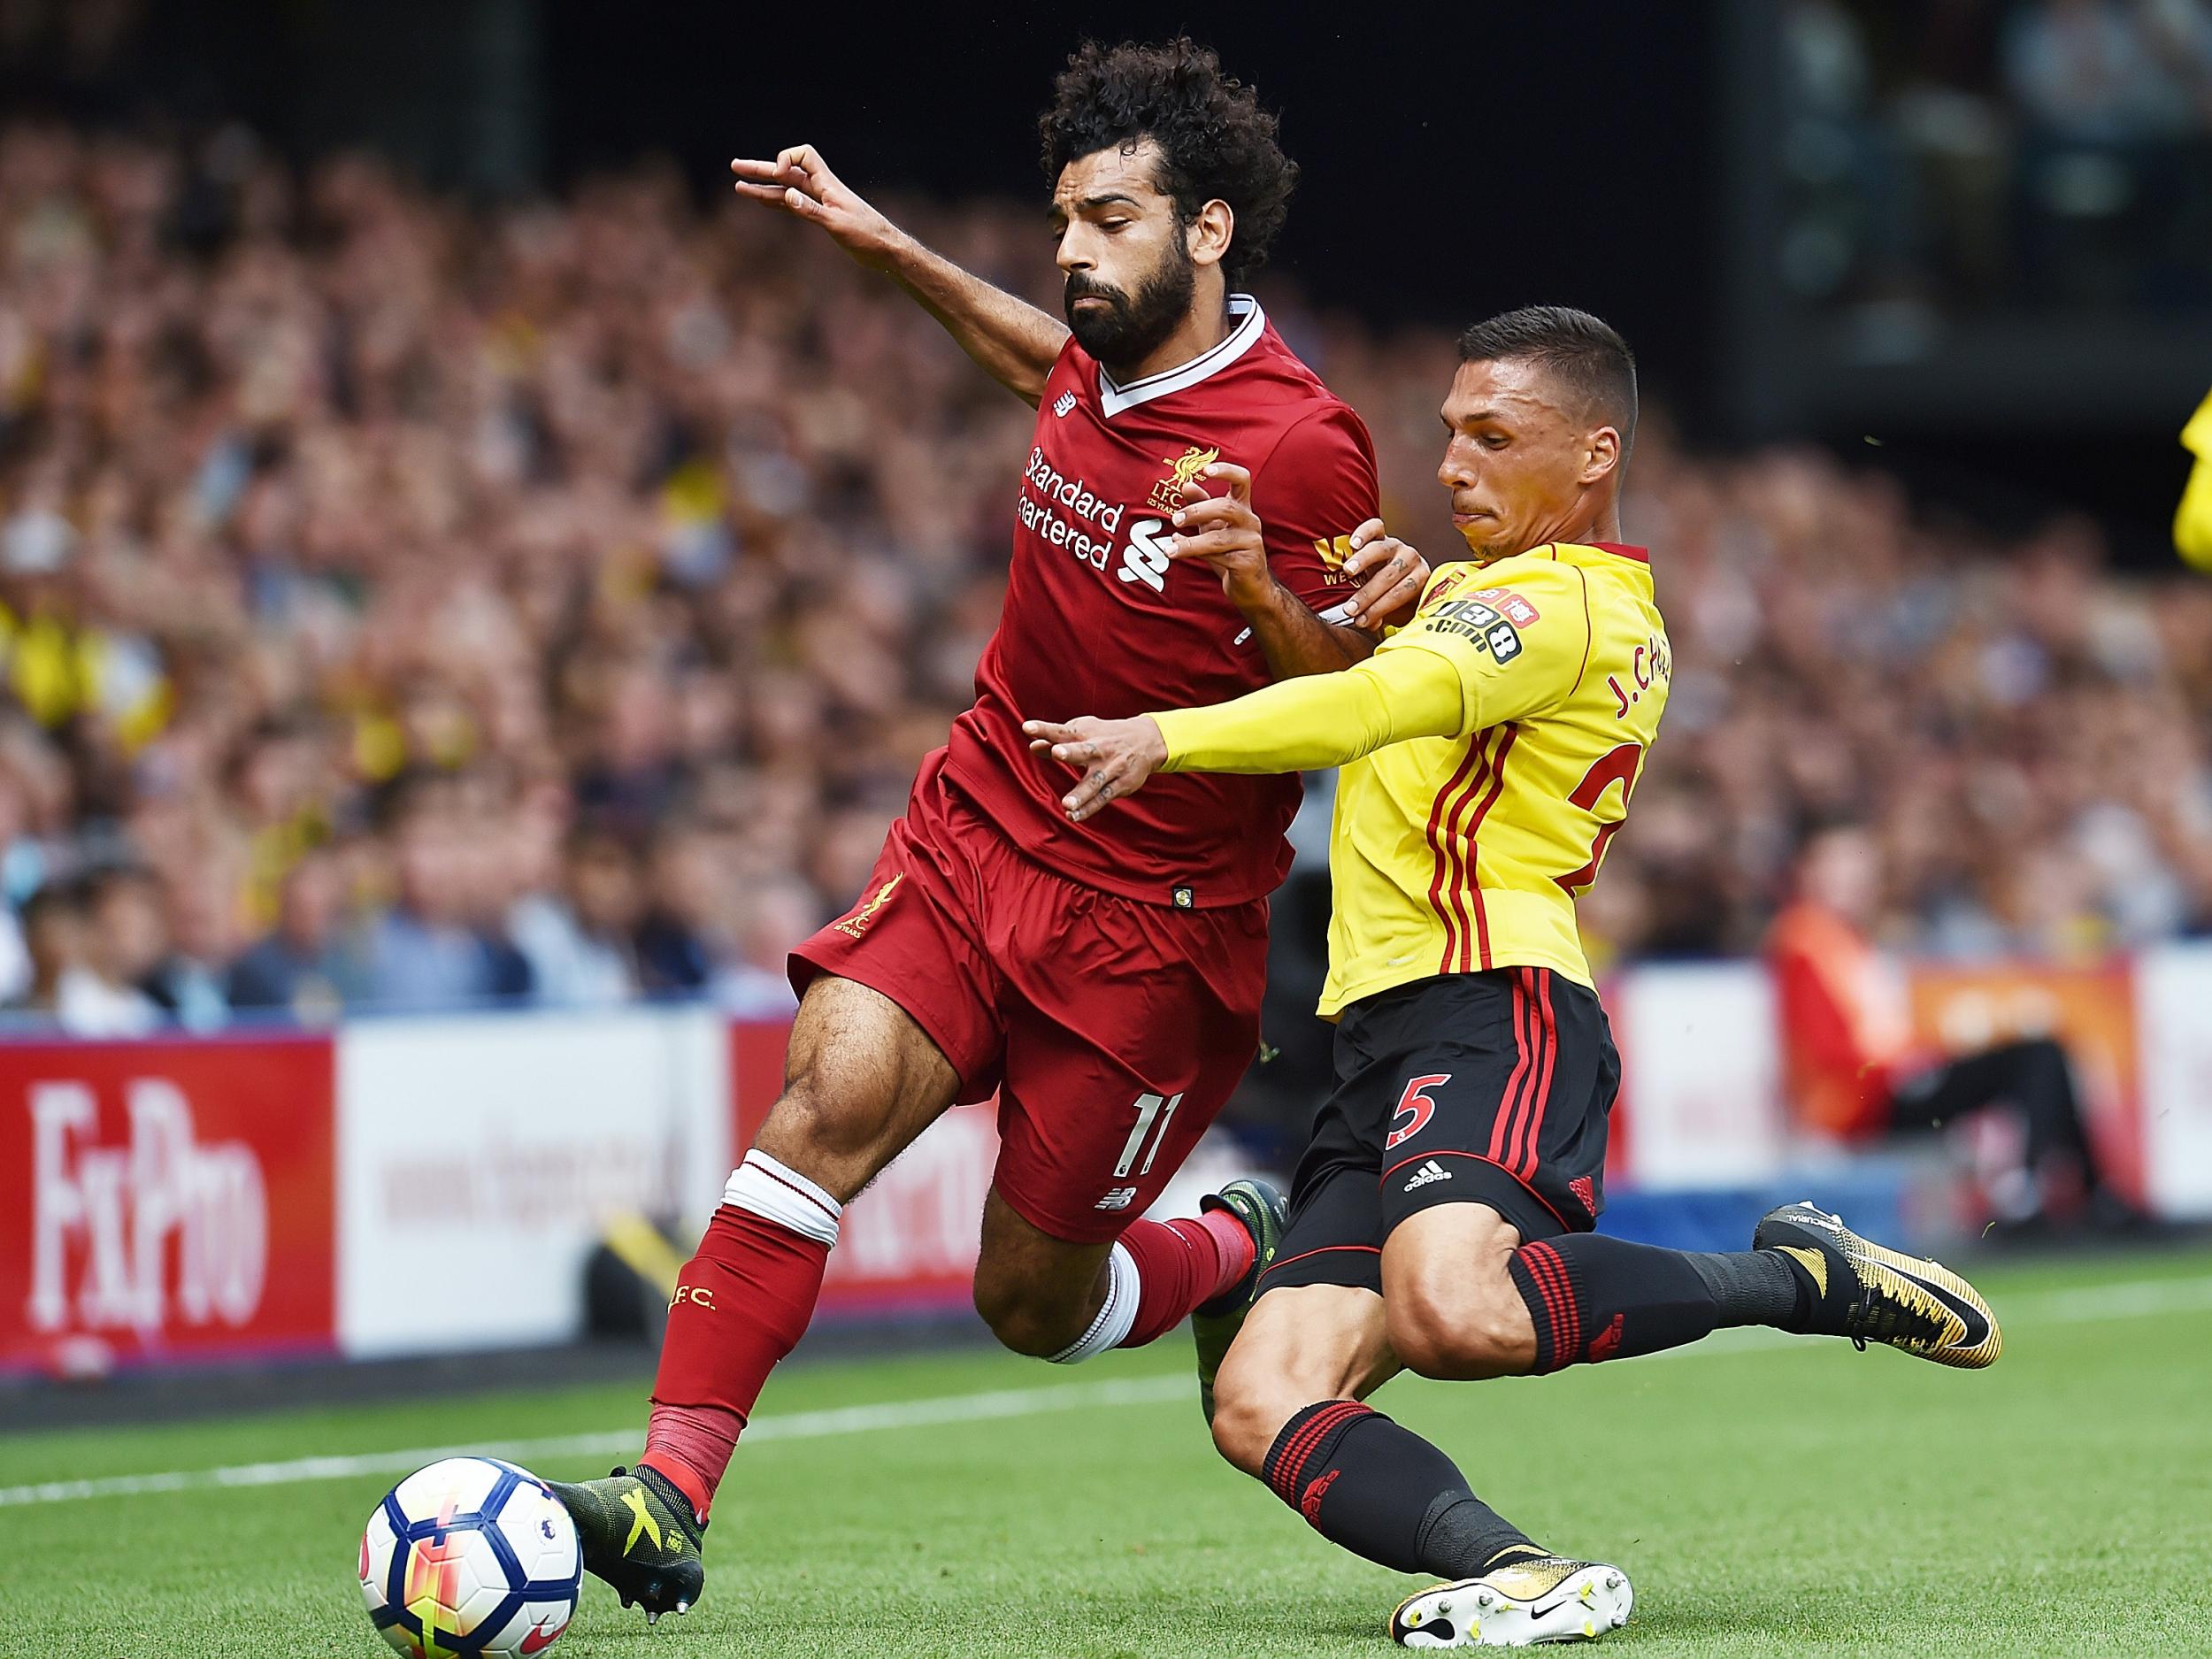 Salah had an encouraging debut (Liverpool FC via Getty)